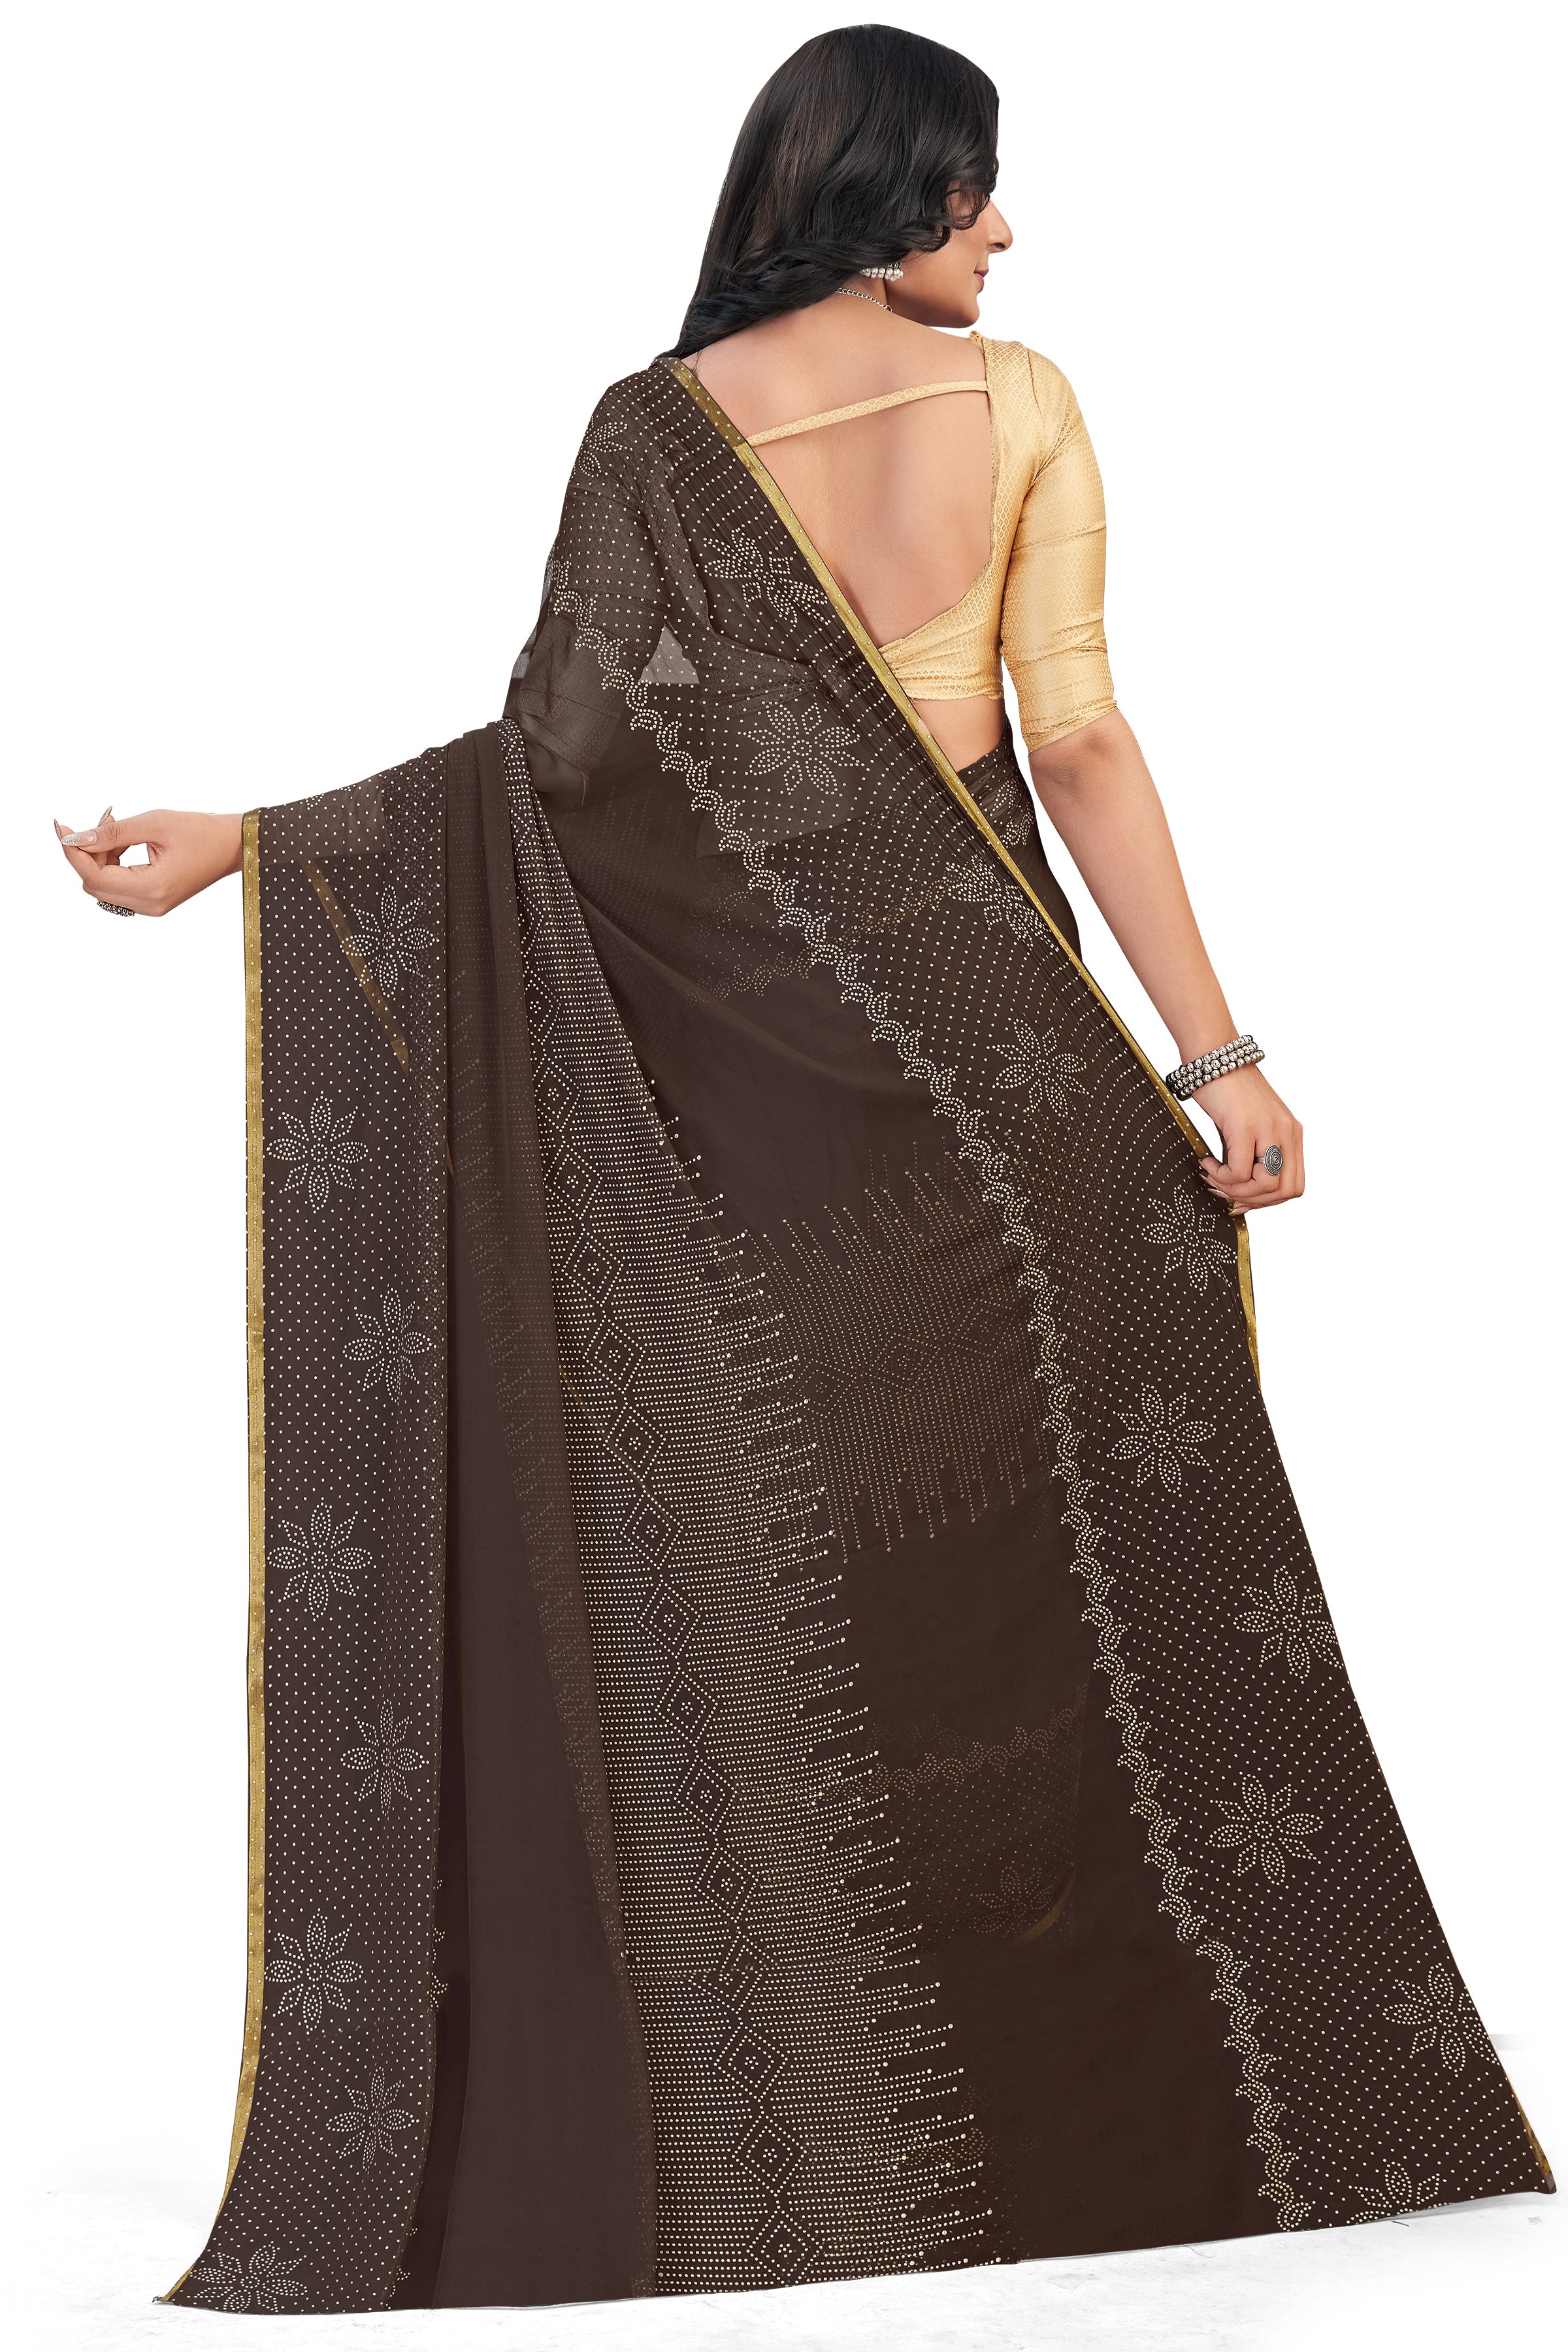 Women's Bandhani Daily Wear Chiffon Sari With Blouse Piece (Coffee Brown) - NIMIDHYA